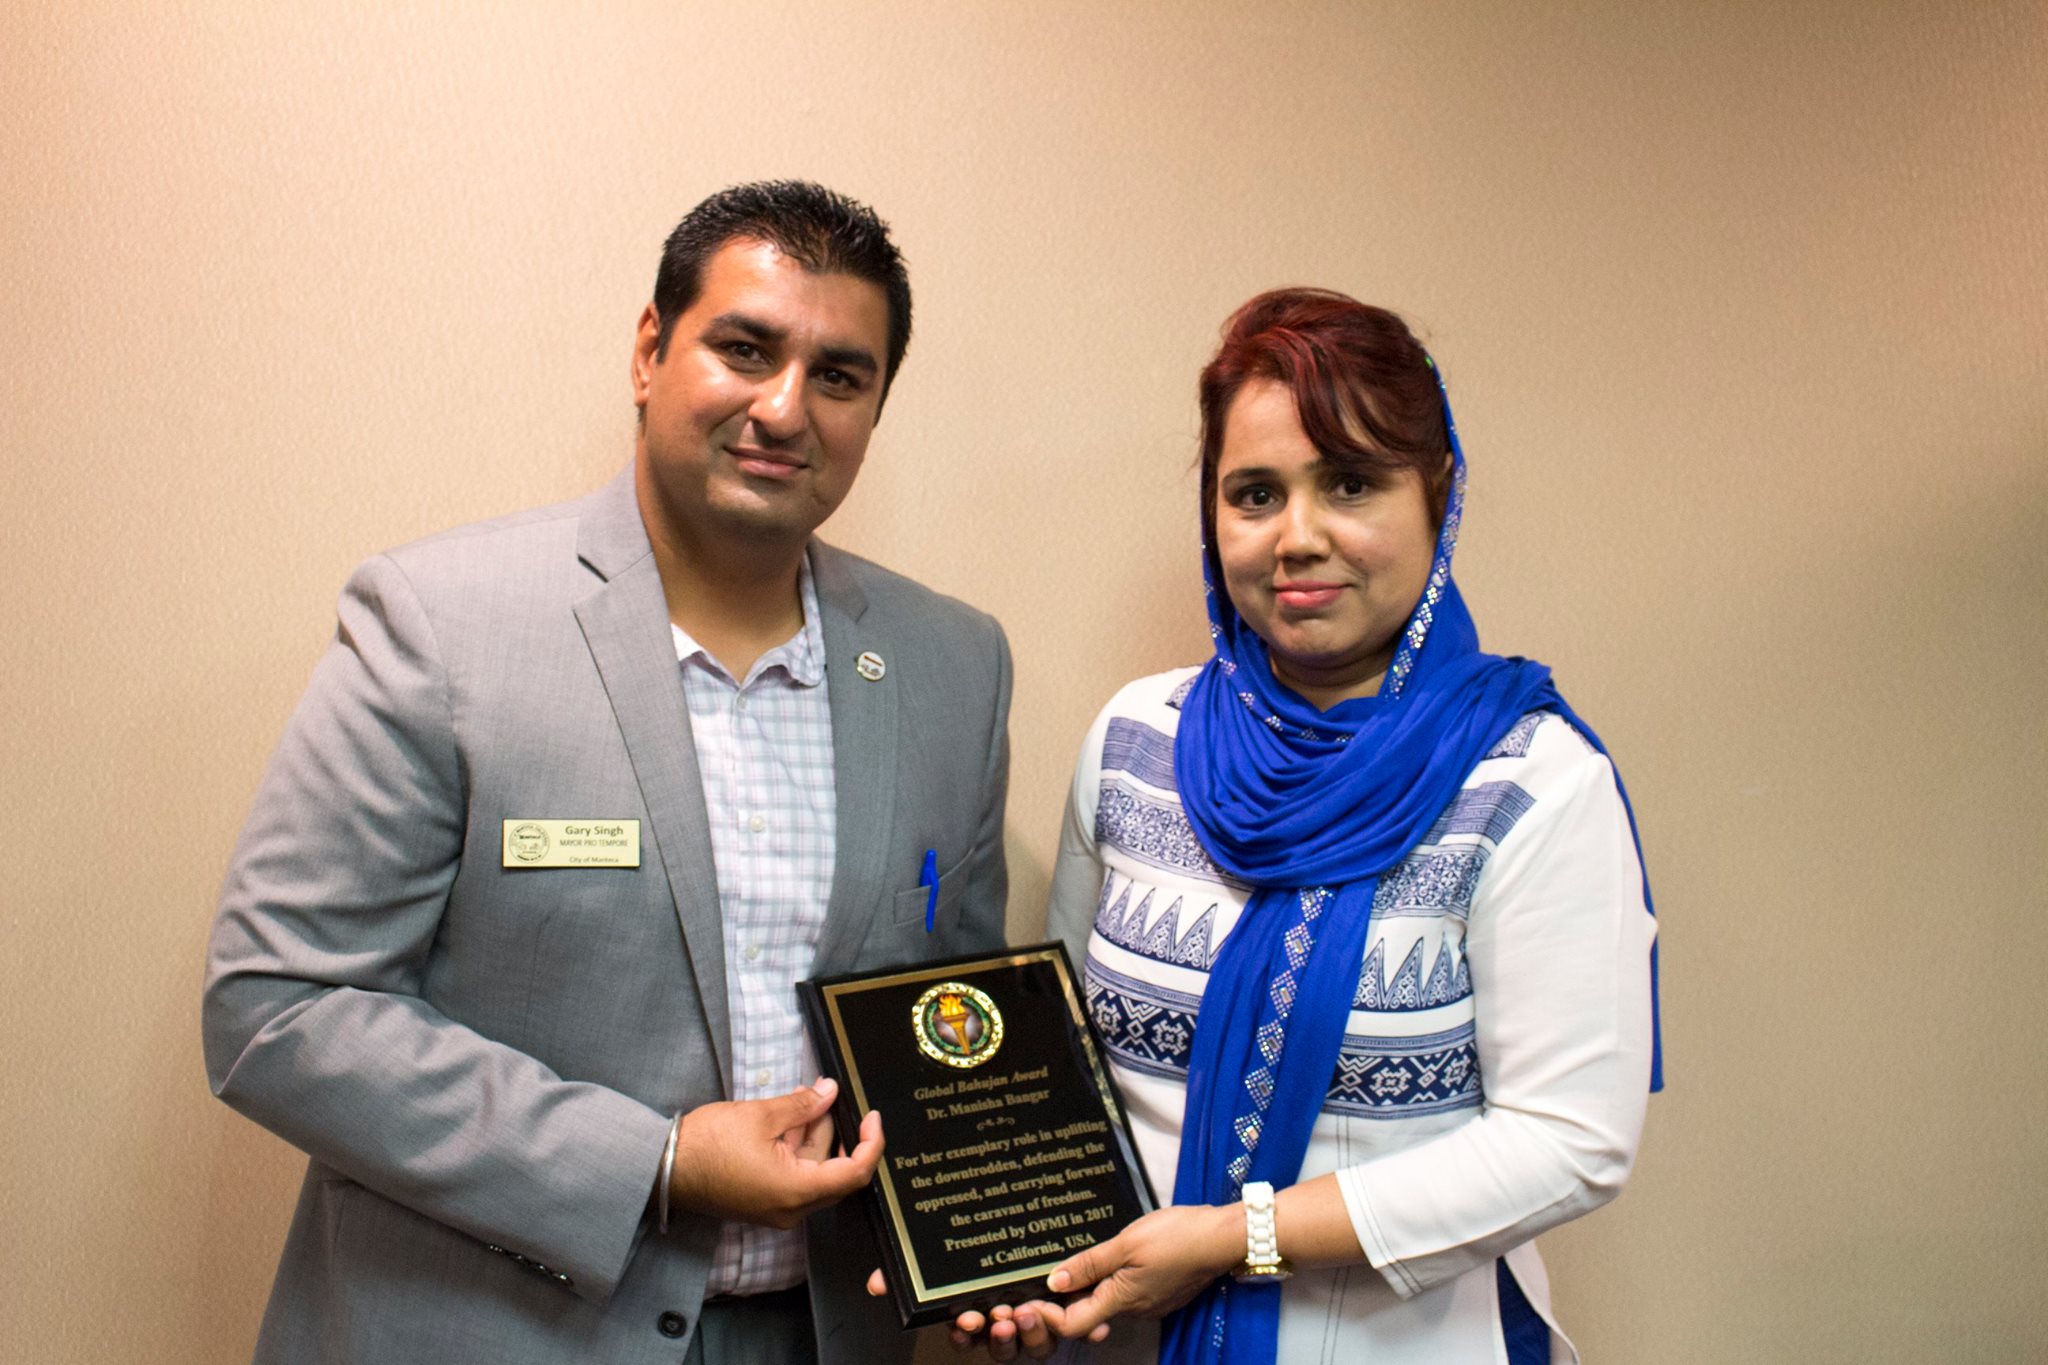 Manteca Mayor Pro-Tempore Gary Singh Presents "Bahujan Award" to Dr. Manisha Bangar